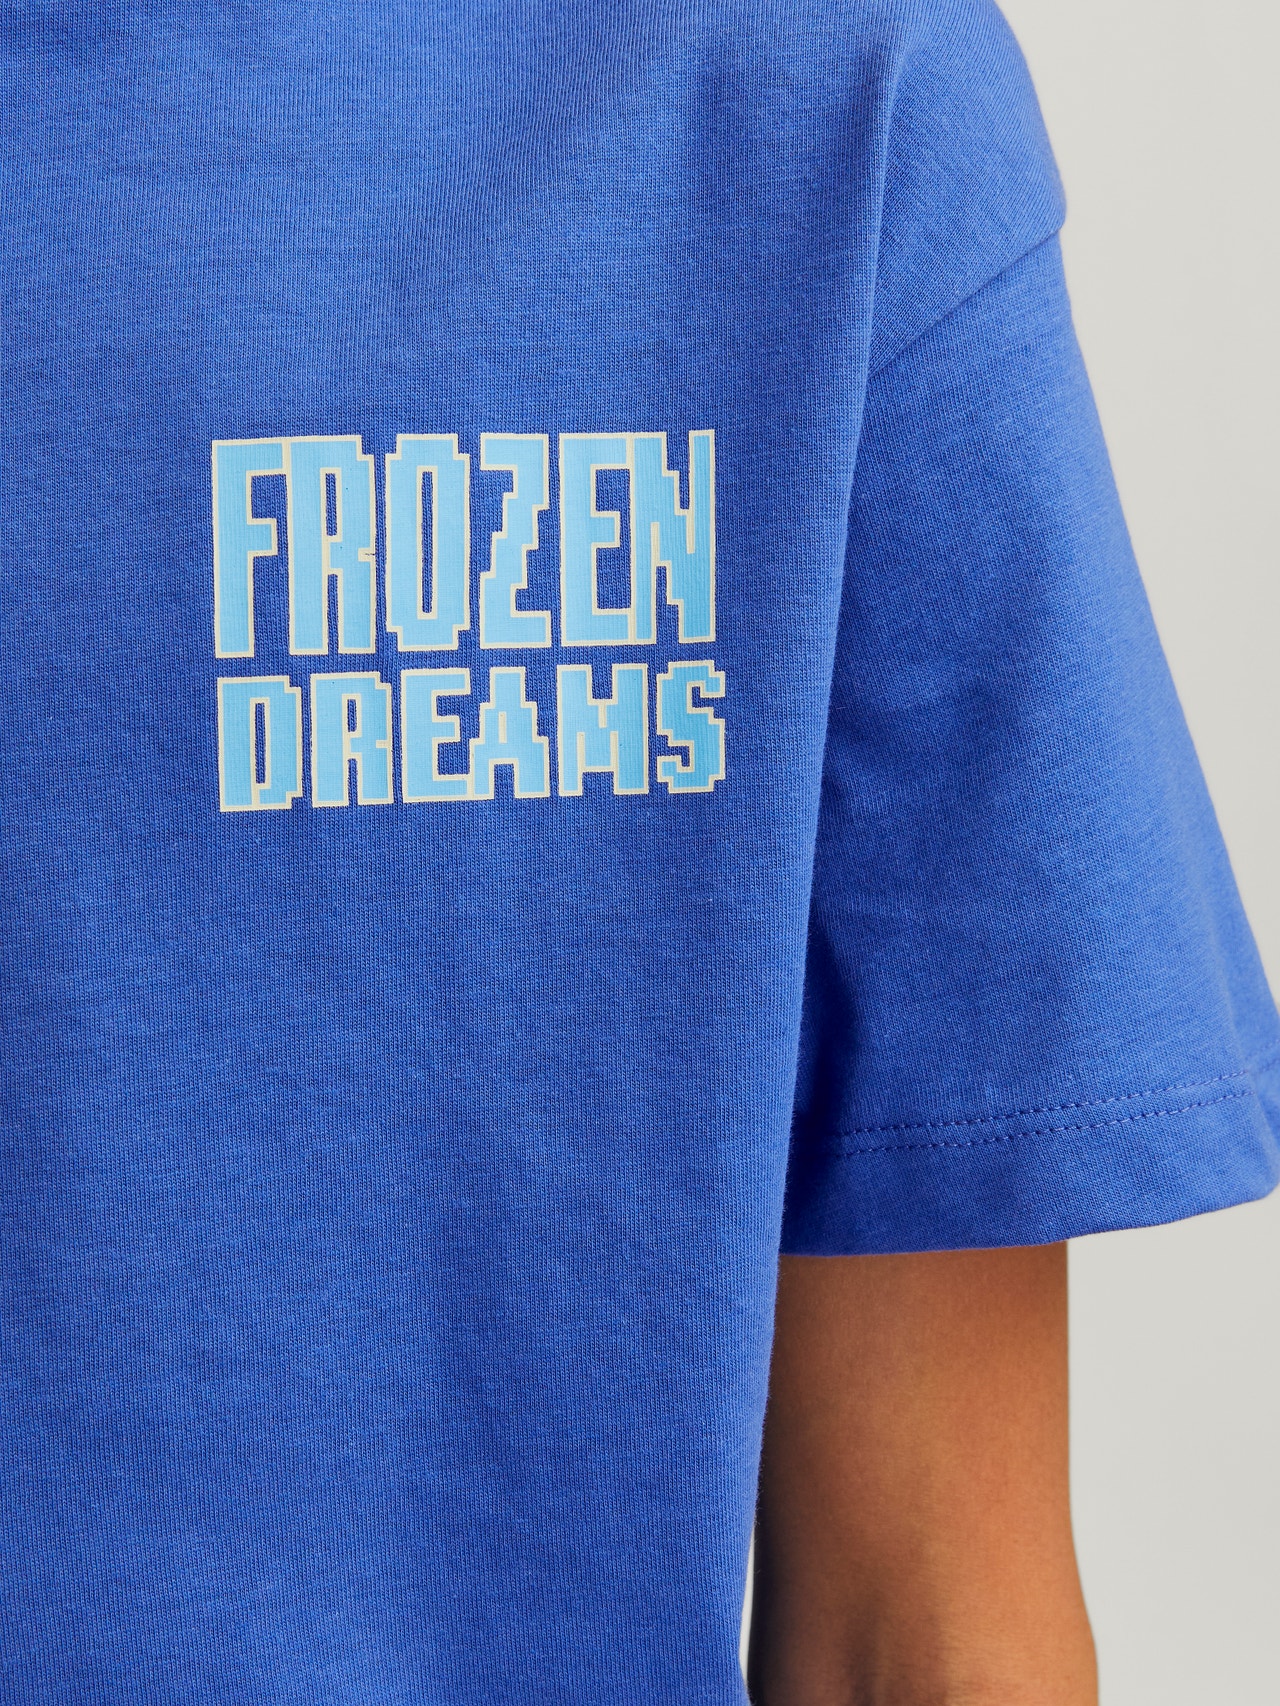 Jack & Jones Camiseta Estampado Para chicos -Dazzling Blue - 12264191